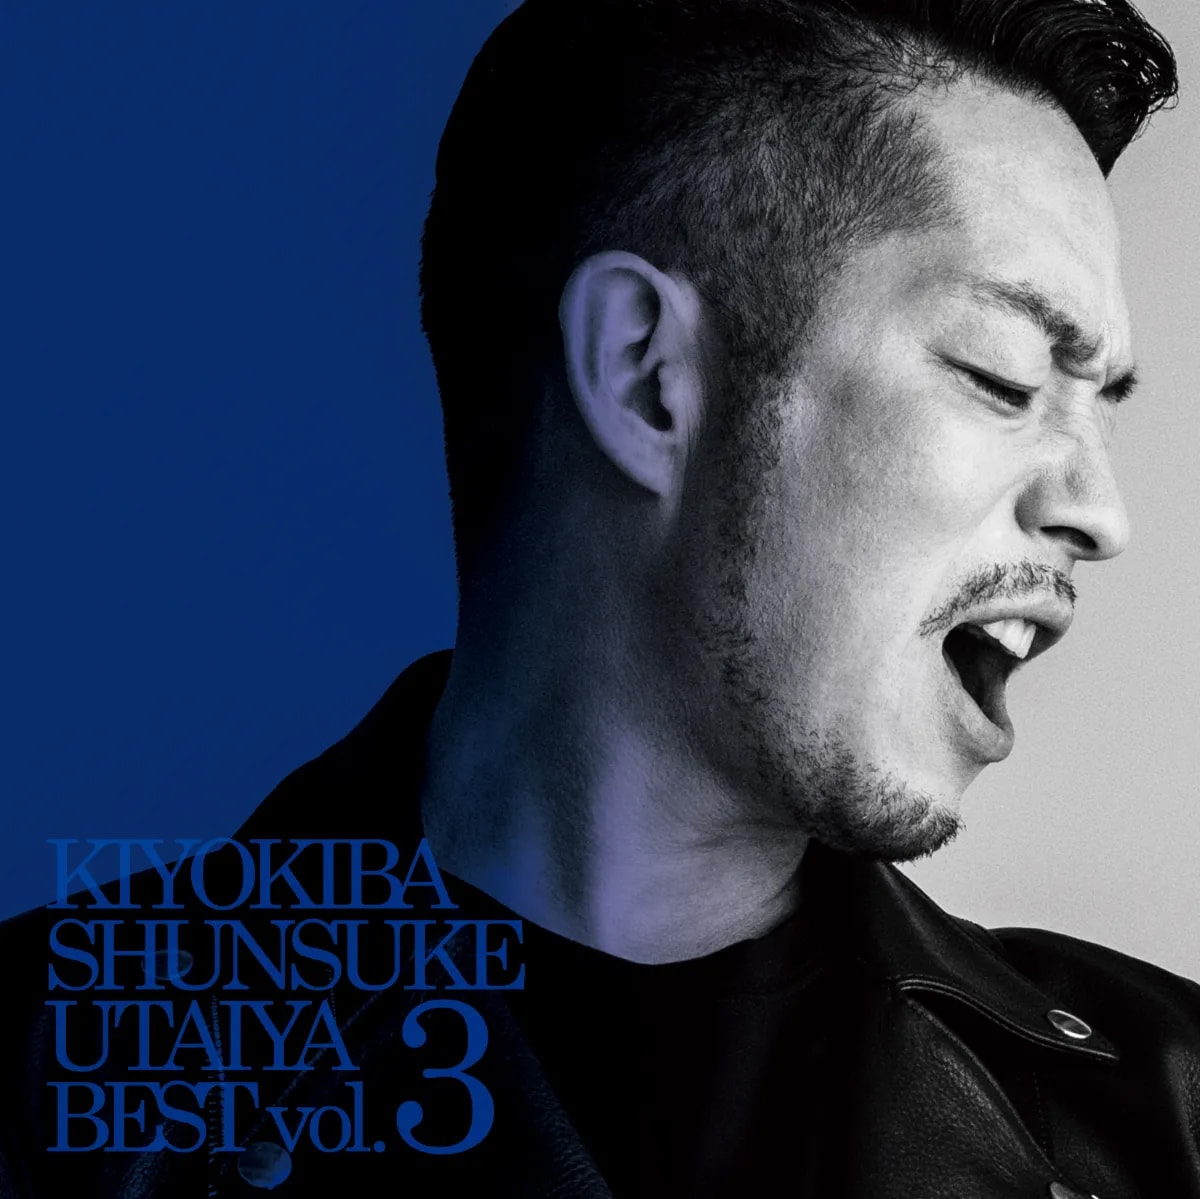 KIYOKIBA SHUNSUKE BEST ALBUM